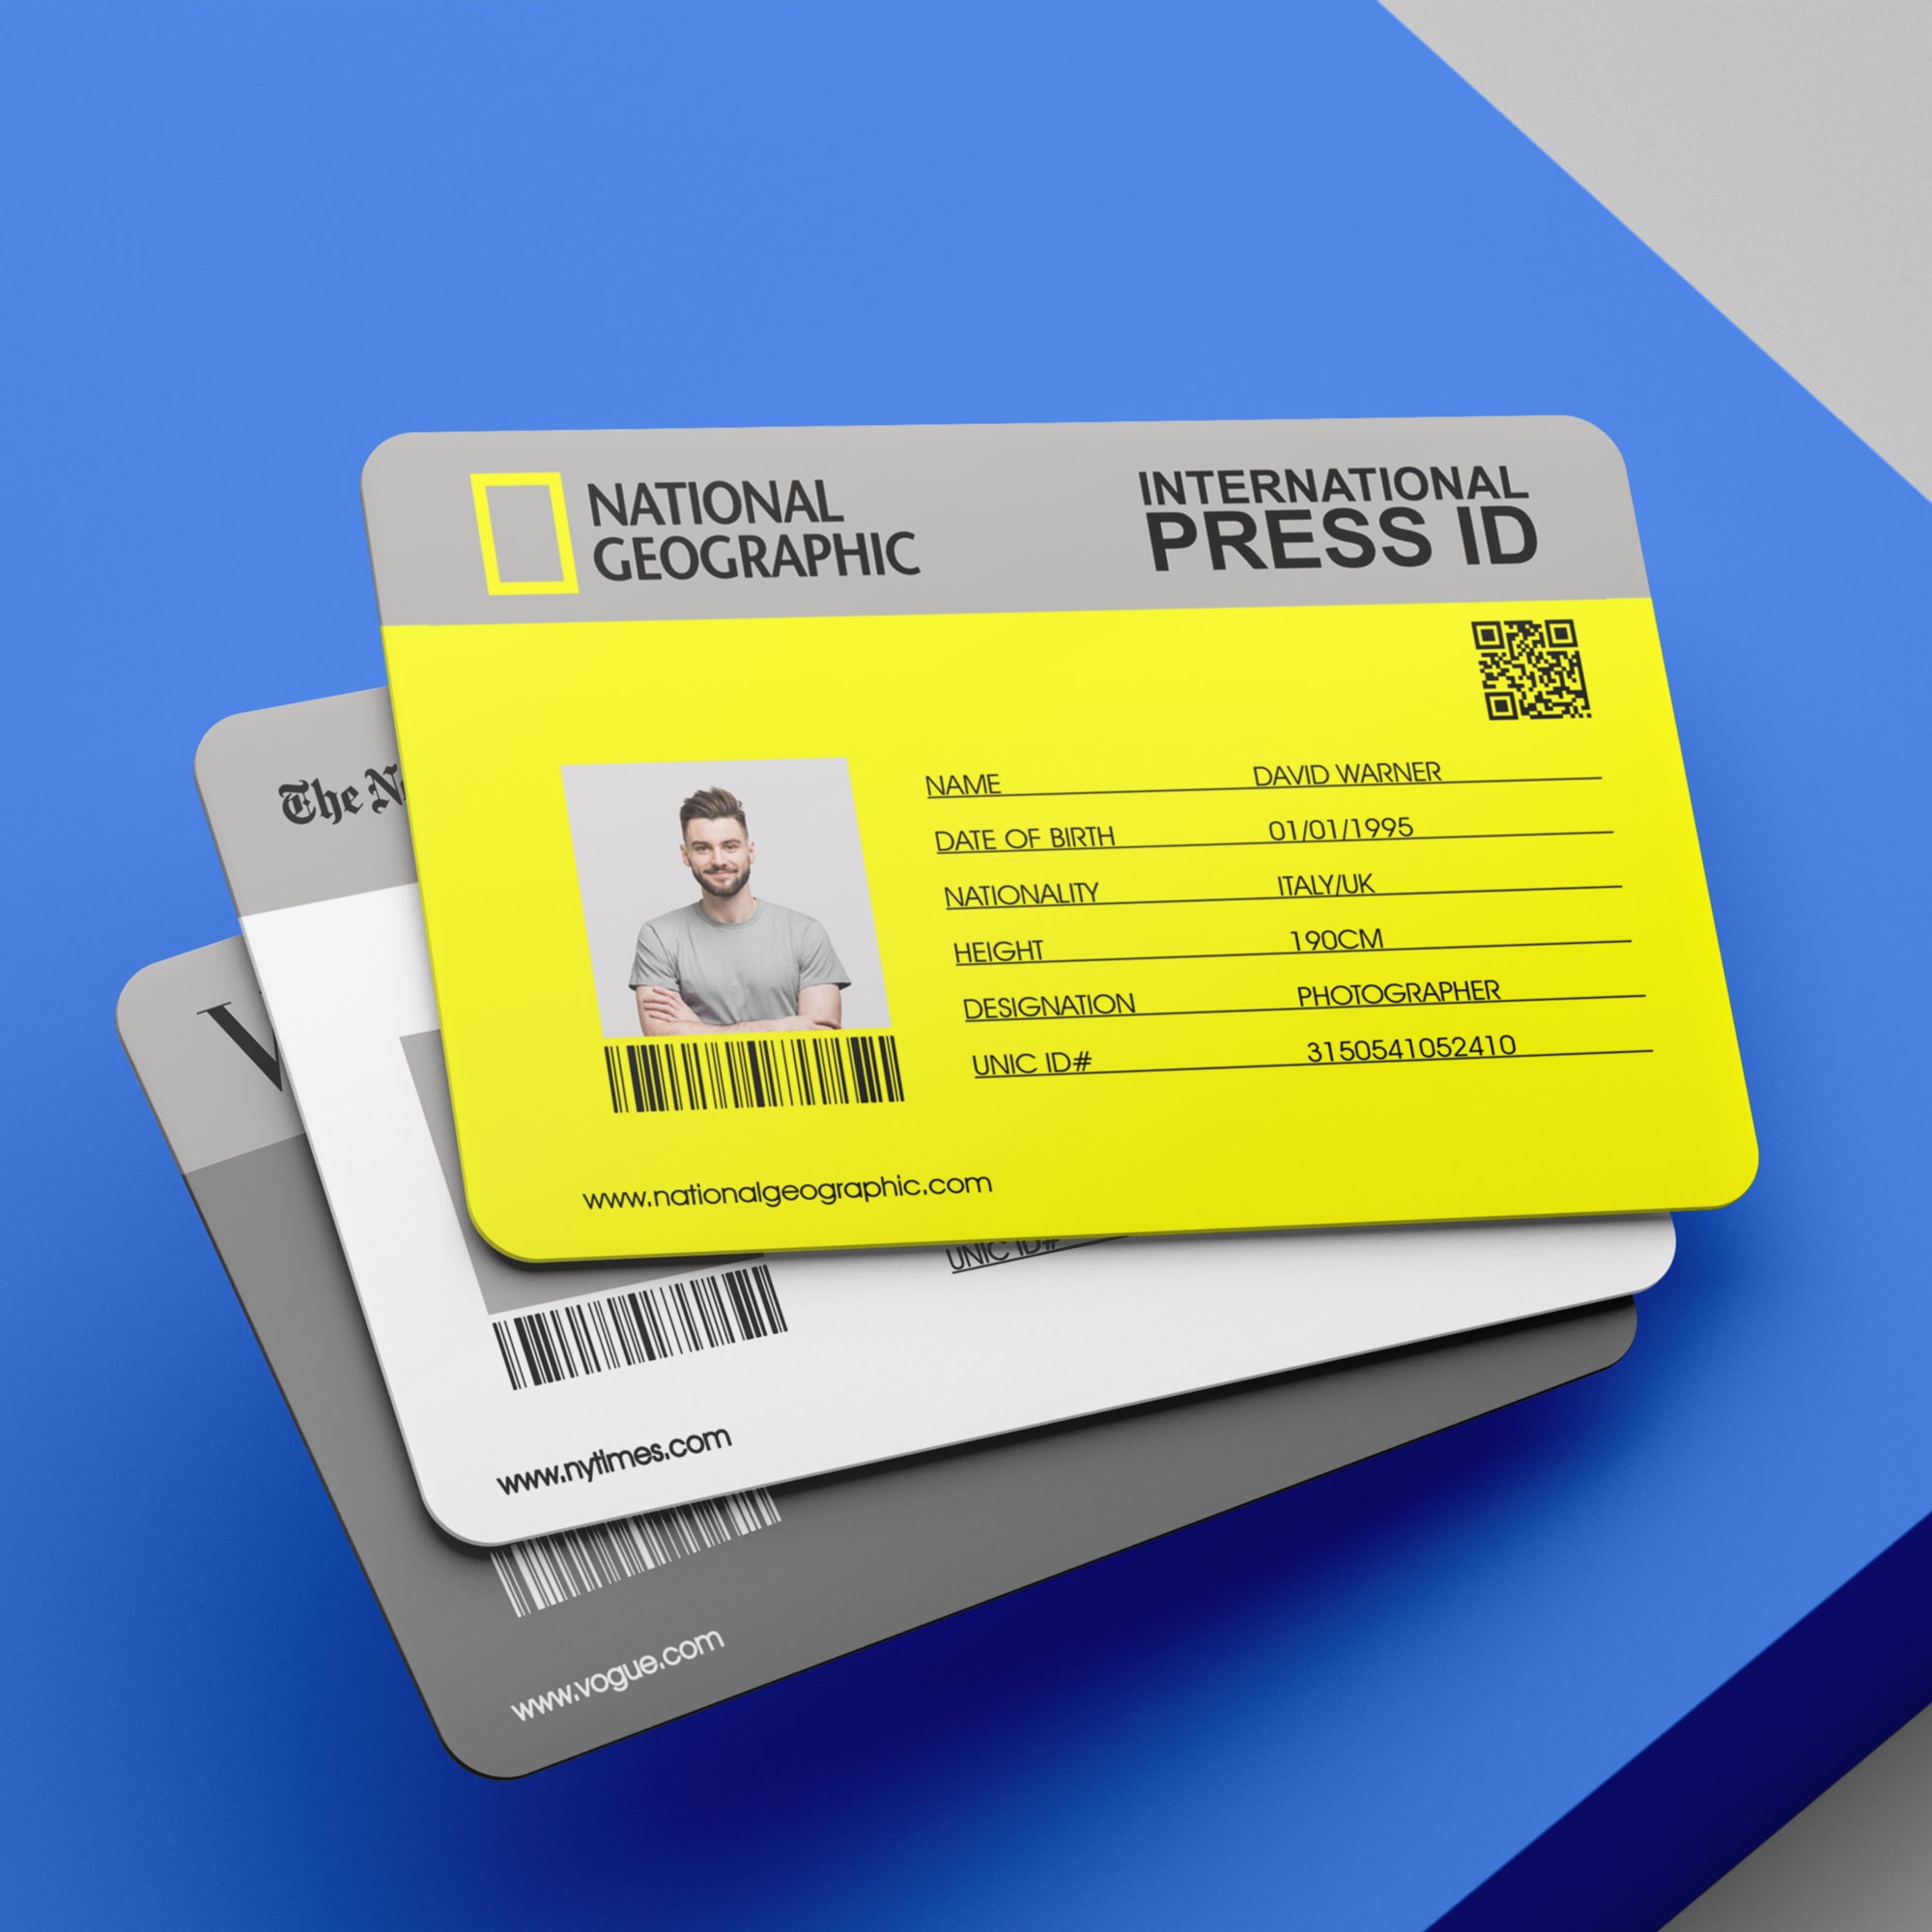 The Photo ID Card People - Next Day Custom ID Cards